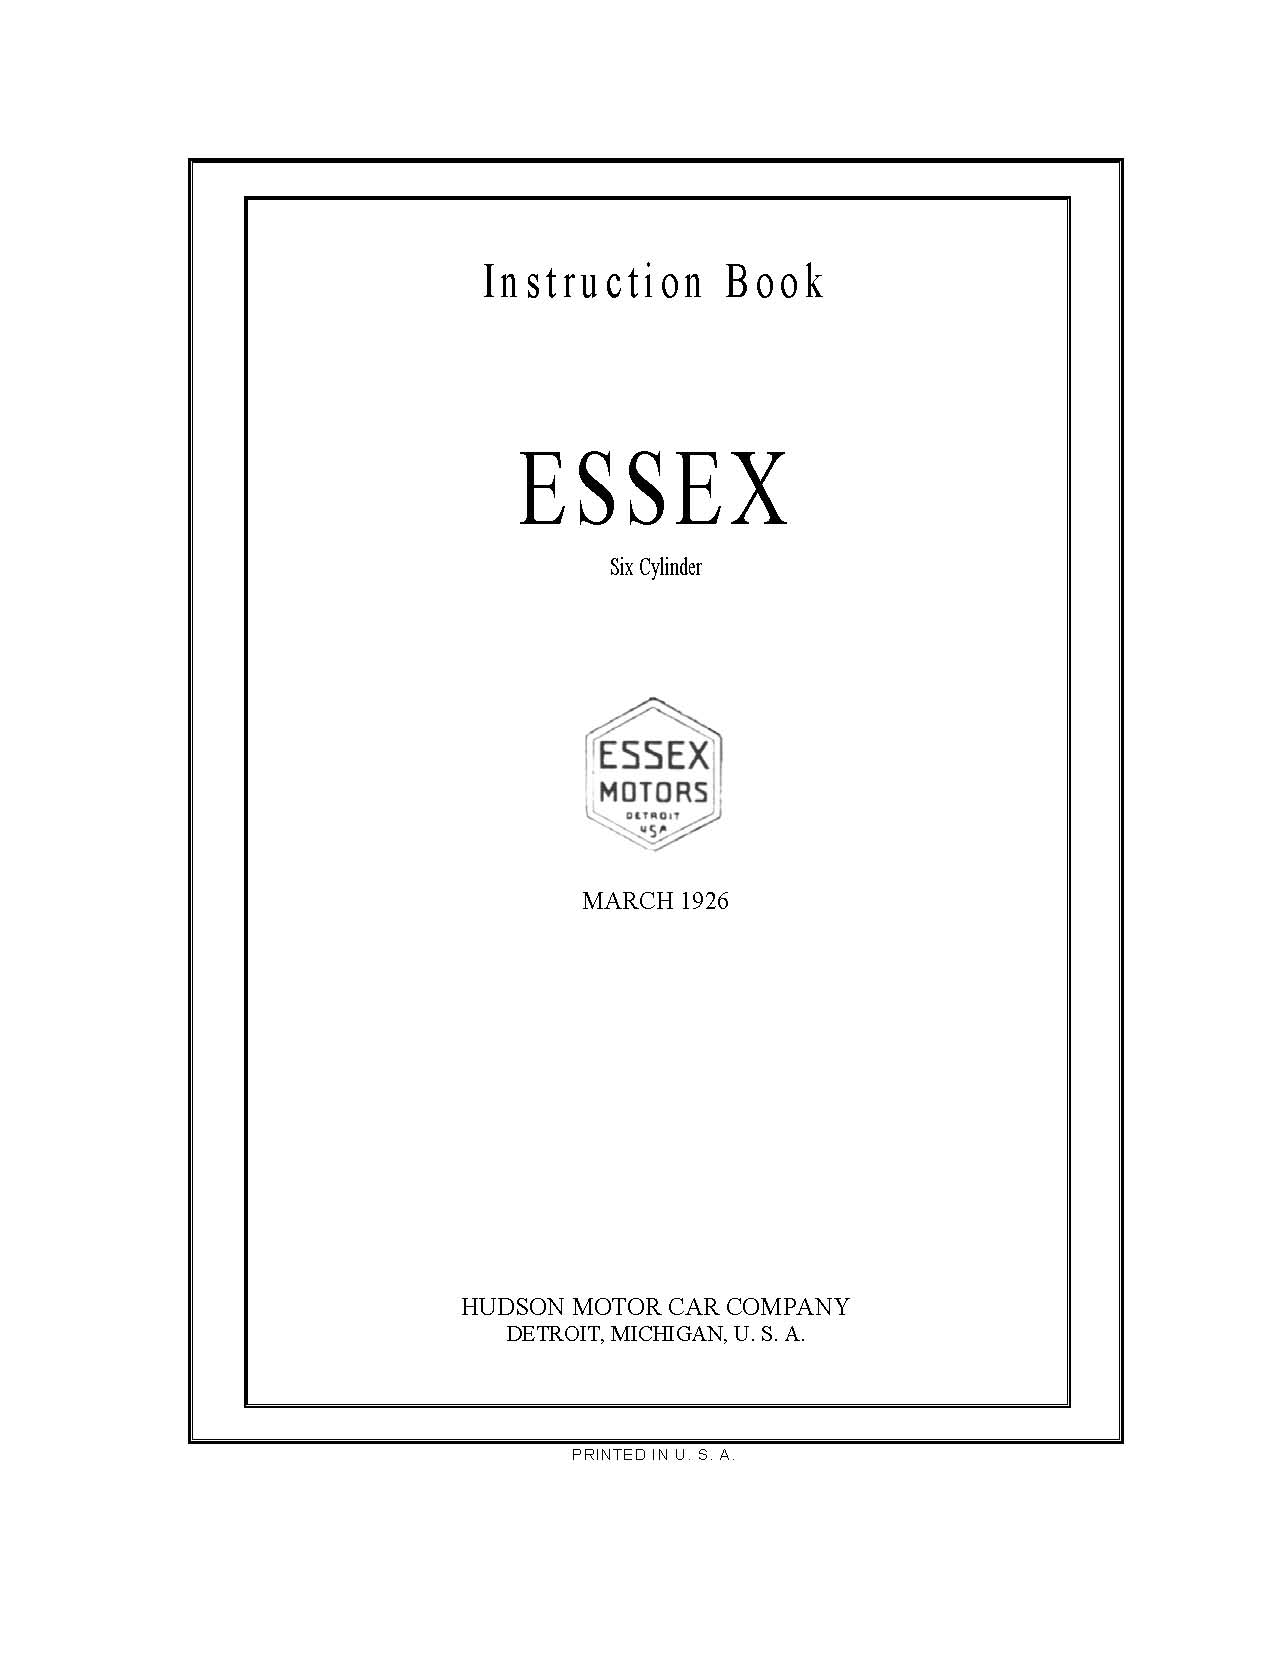 1926 Essex Instruction Book-01